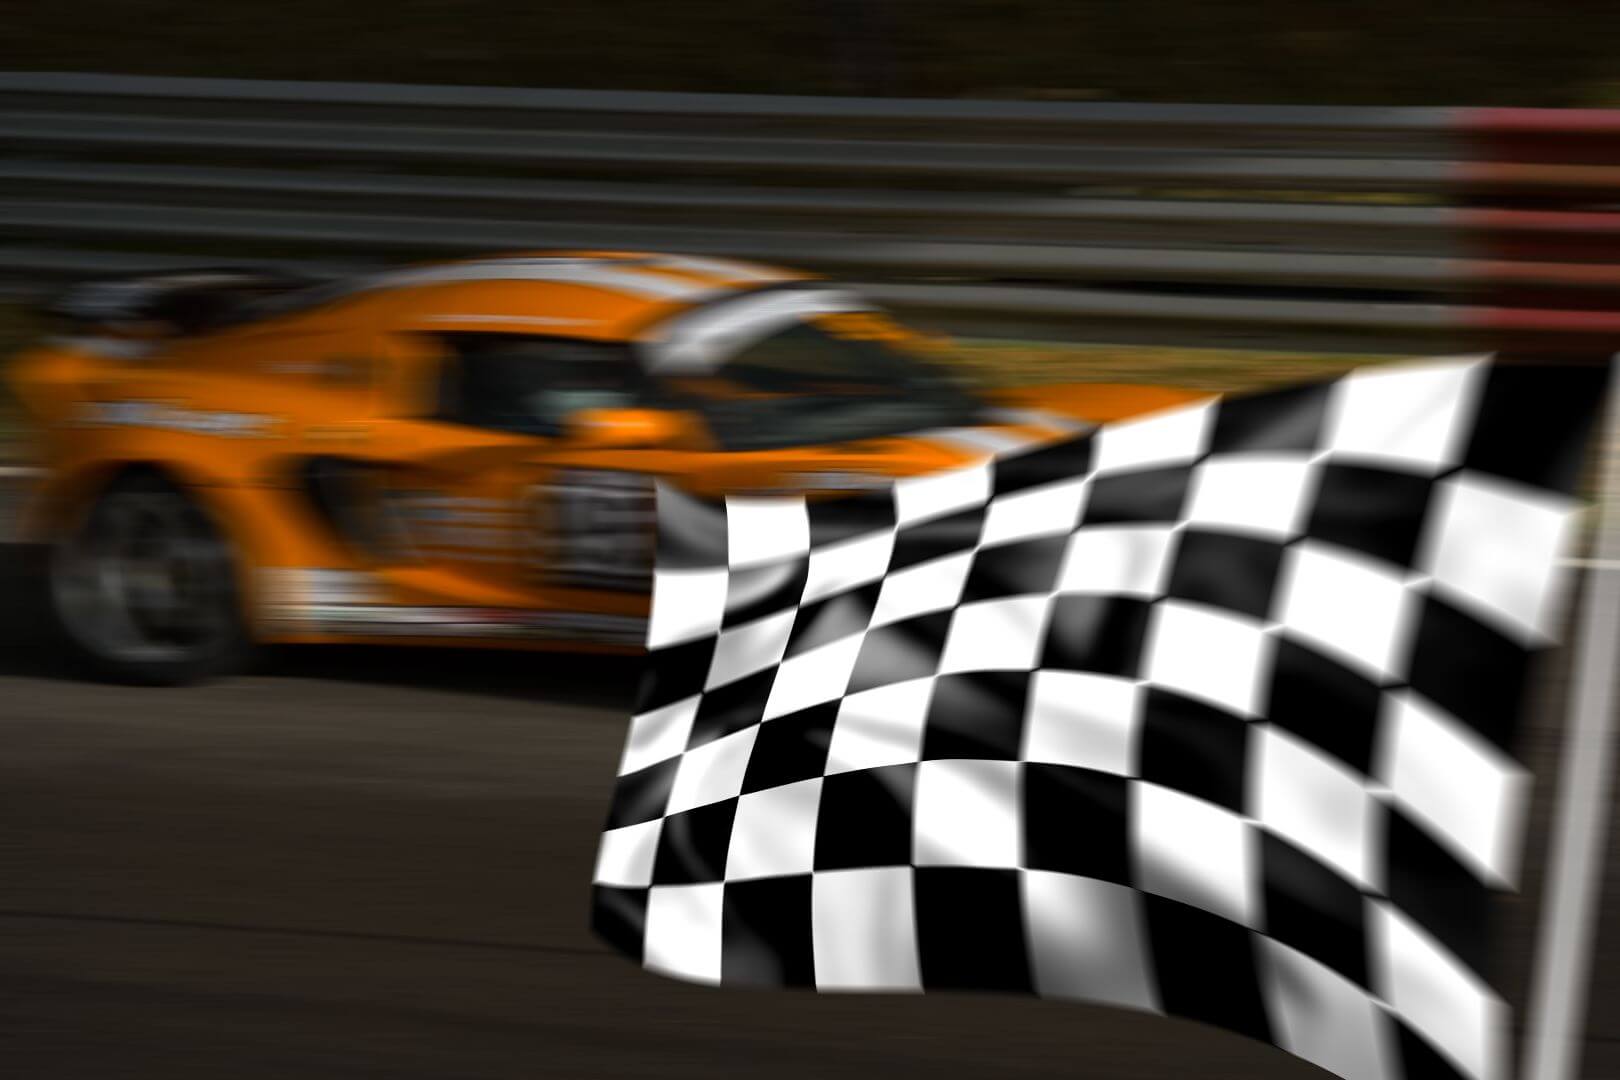 bigstock-Orange-Racing-Car-And-Chequere-2484520.jpg